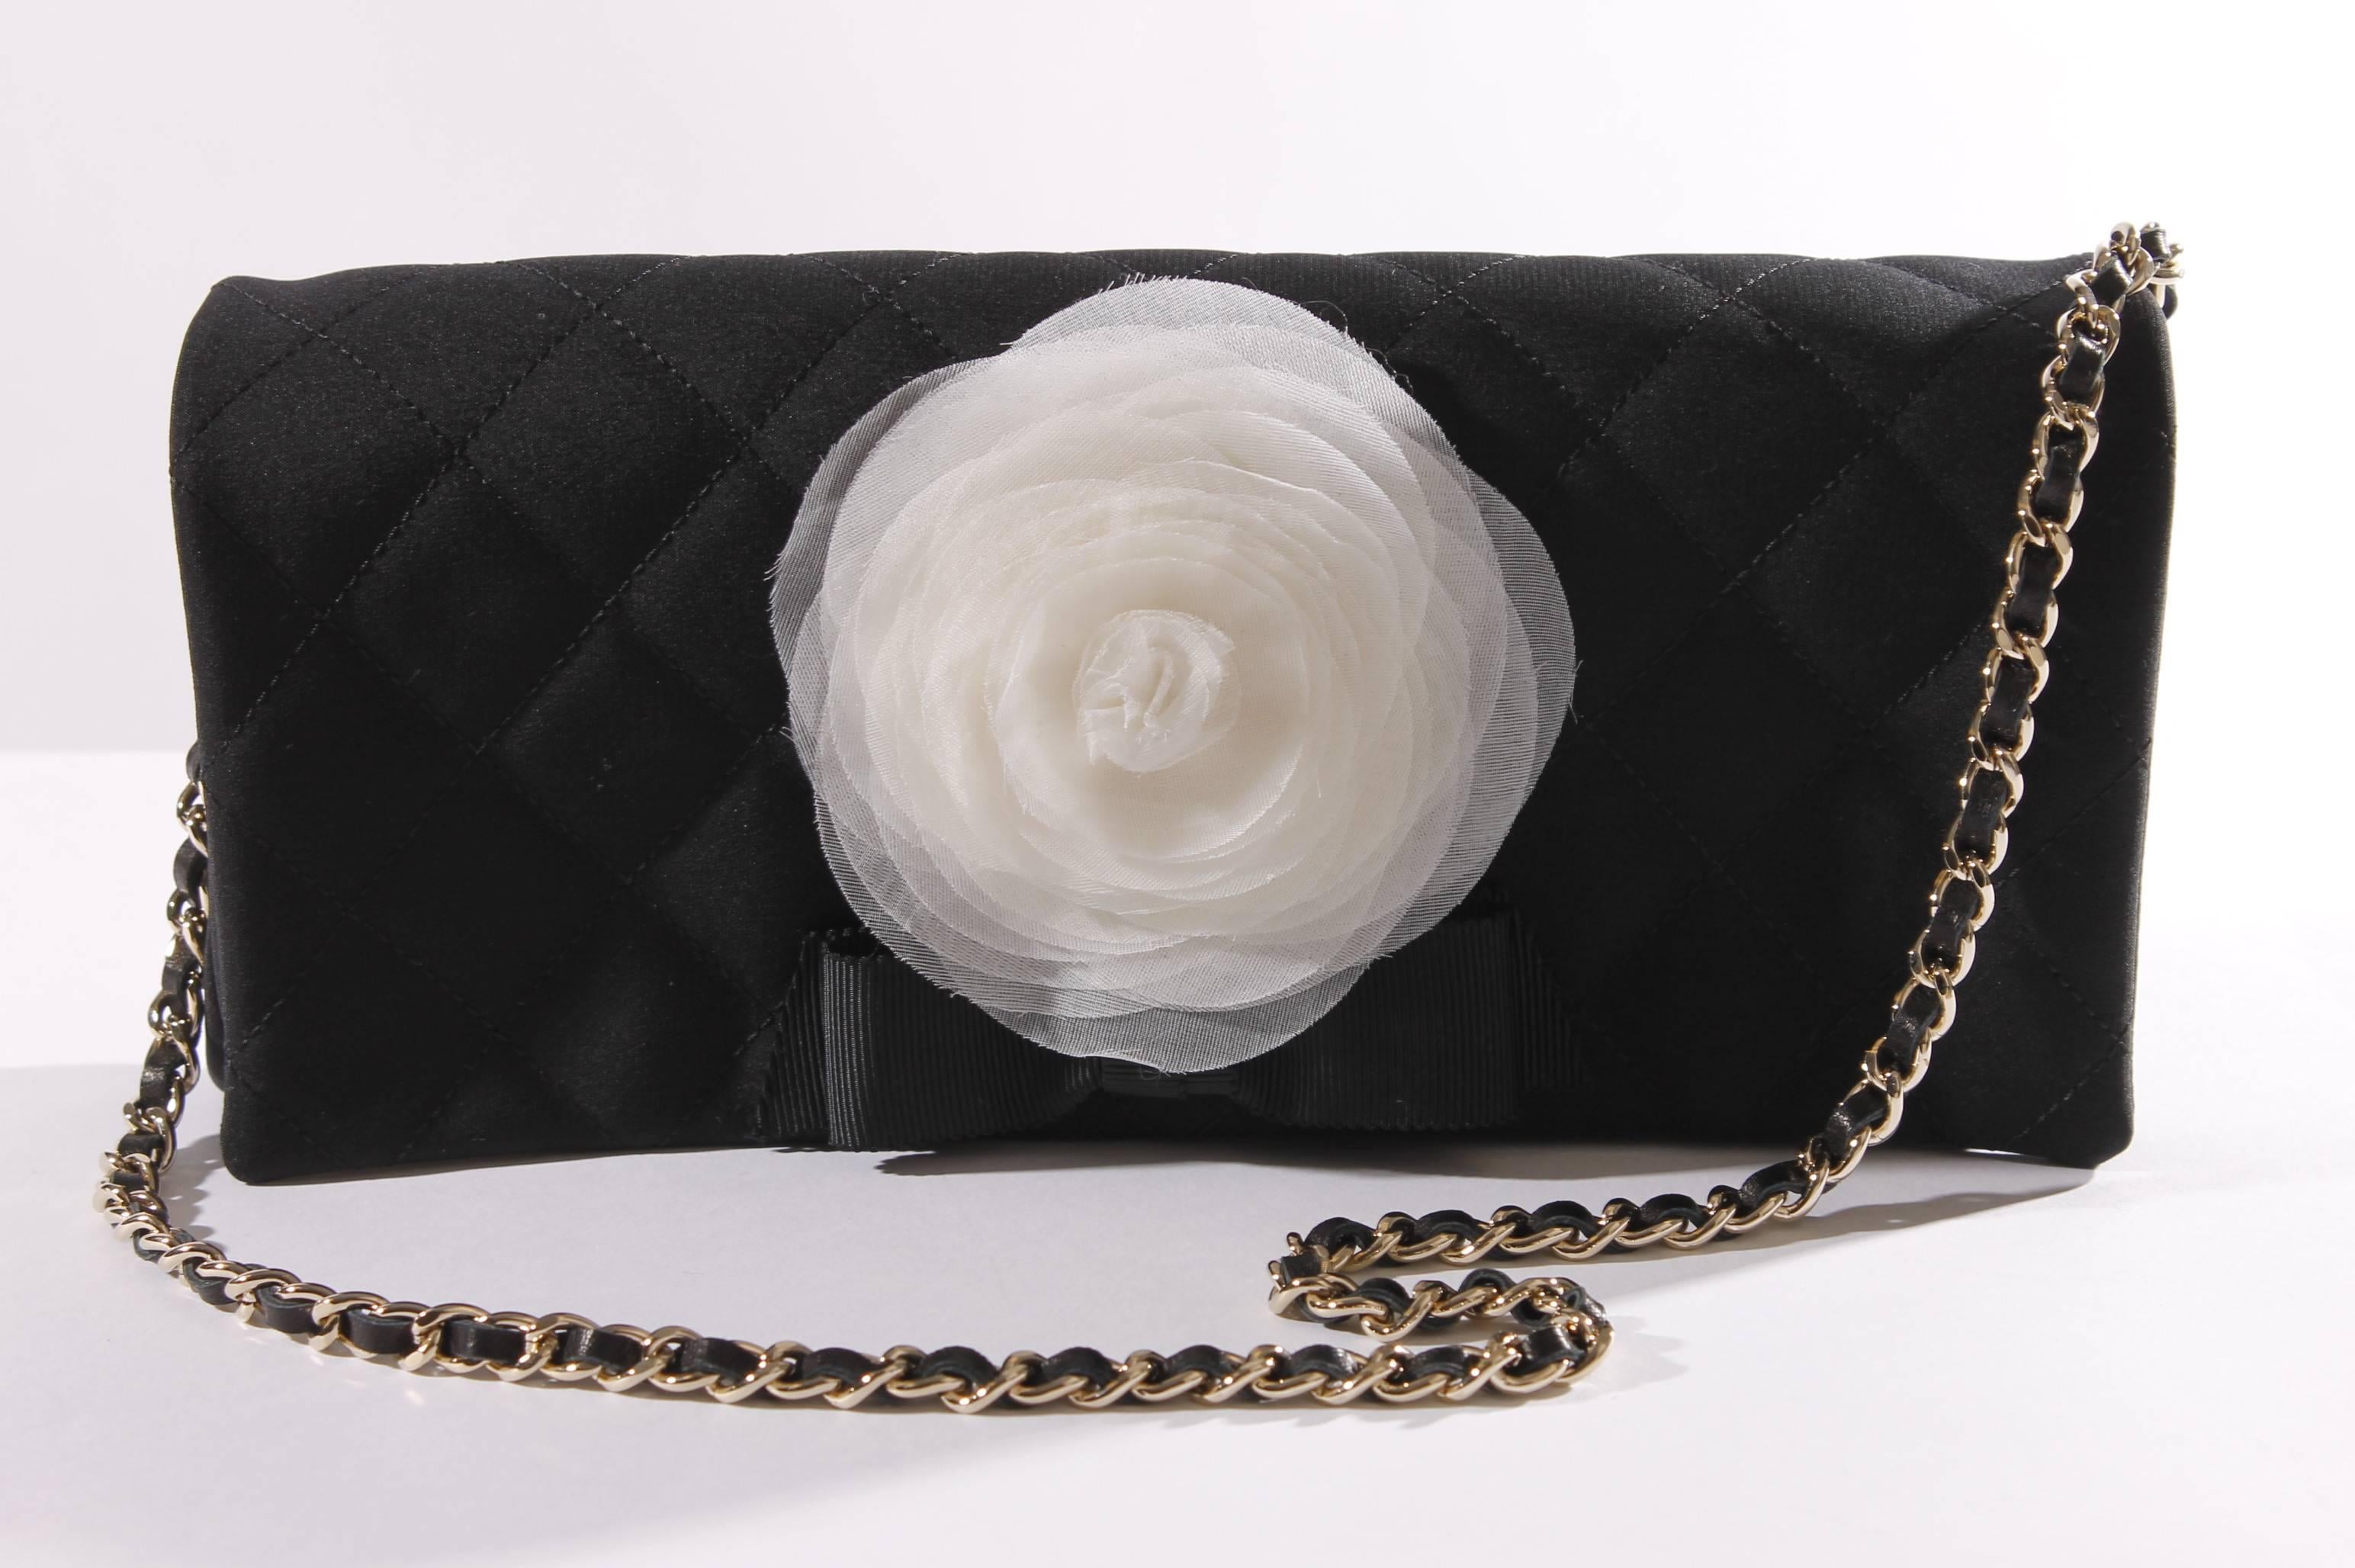 Chanel Satin Camellia Clutch Bag - black/white/silver For Sale 1